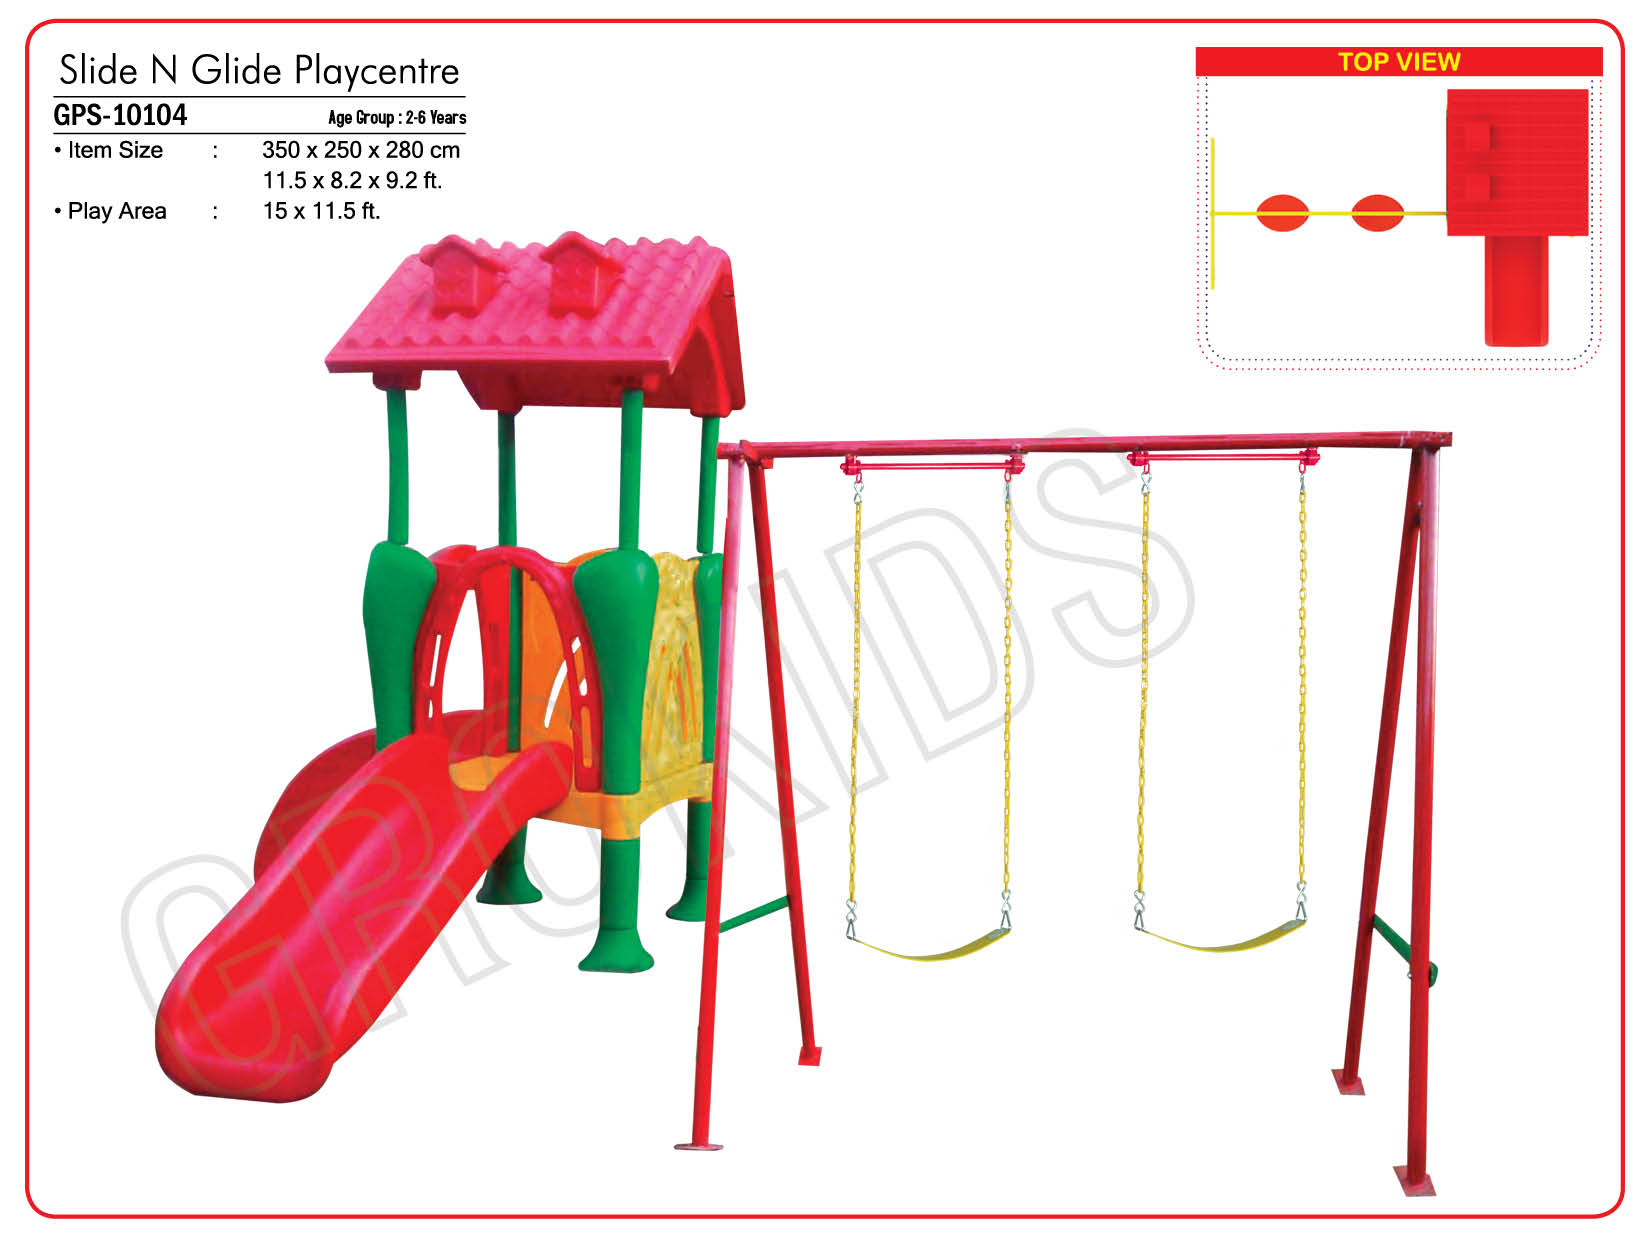 Slide N Glide Playcentre